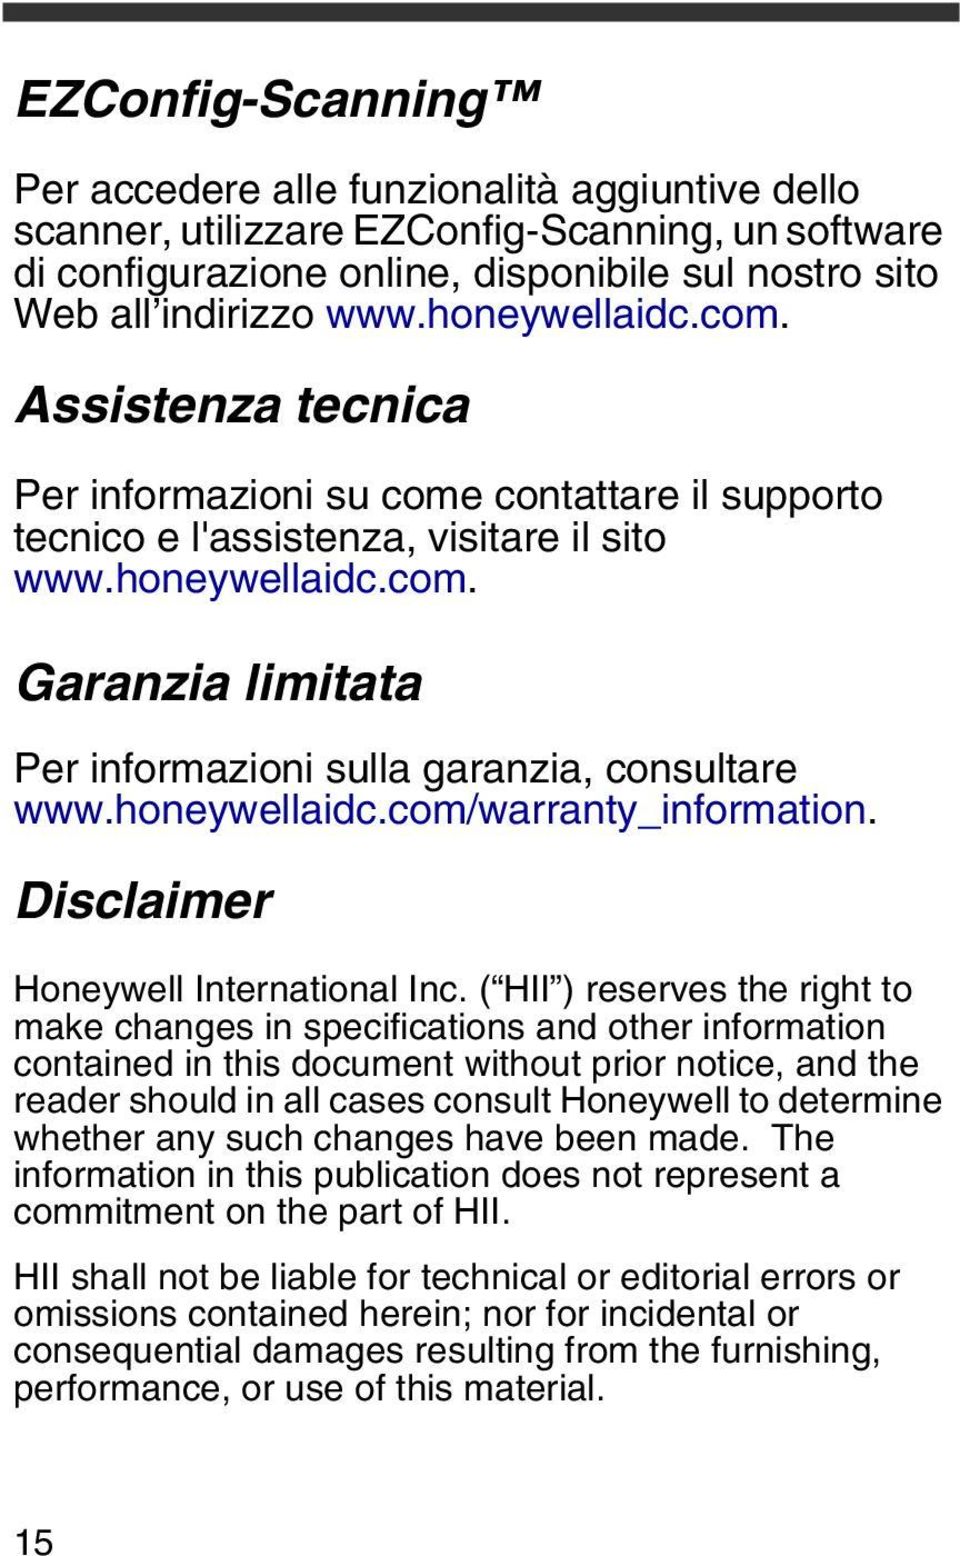 honeywellaidc.com/warranty_information. Disclaimer Honeywell International Inc.